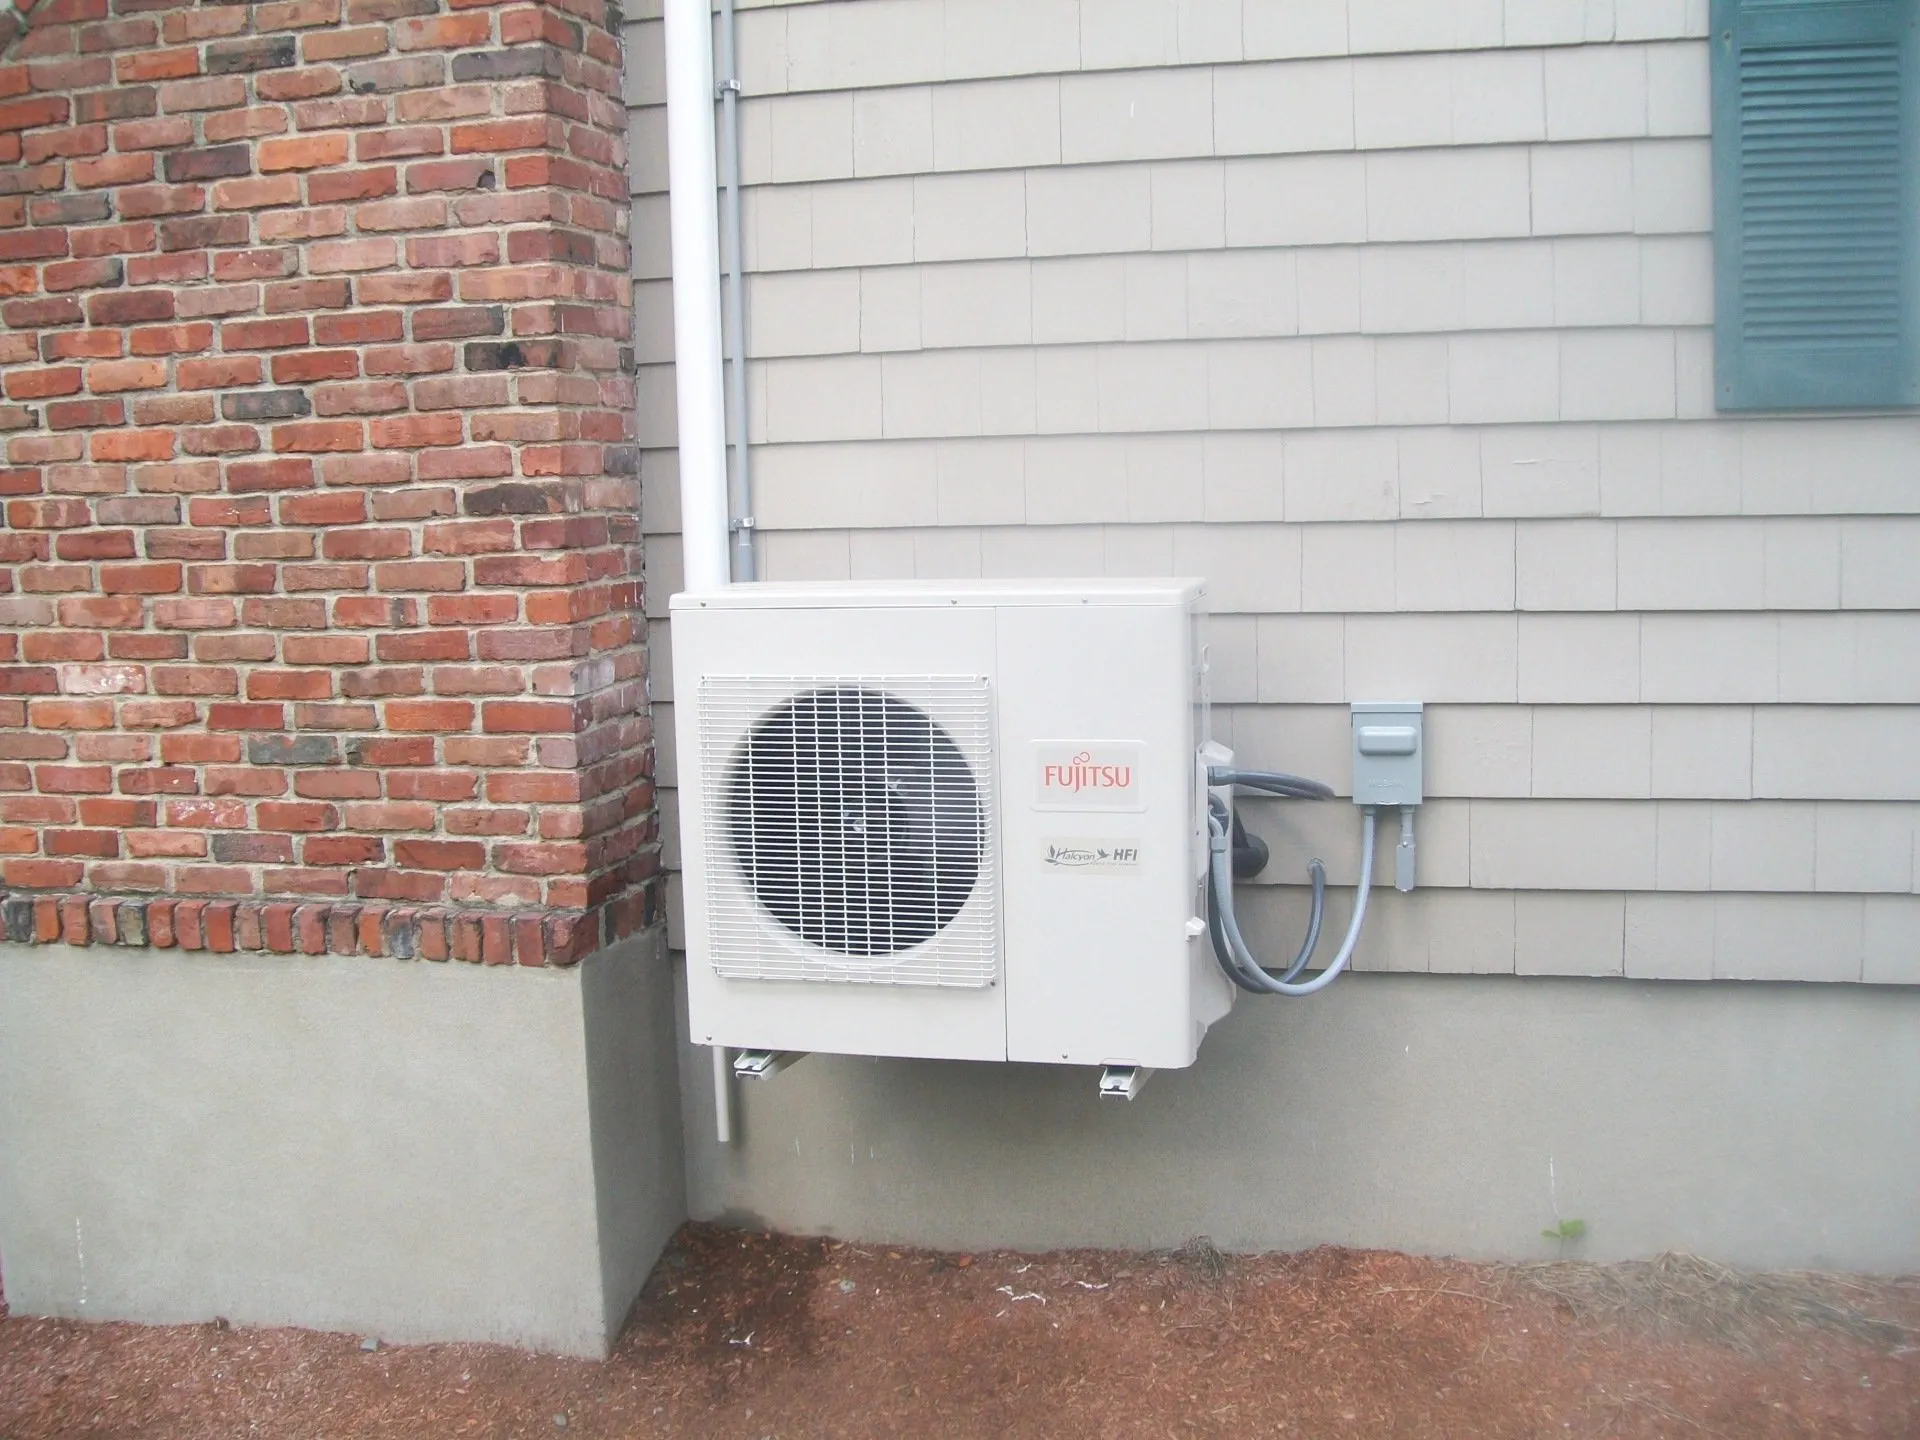 Fujitsu Halcyon Home outdoor condenser unit - Valley Home Services, Maine